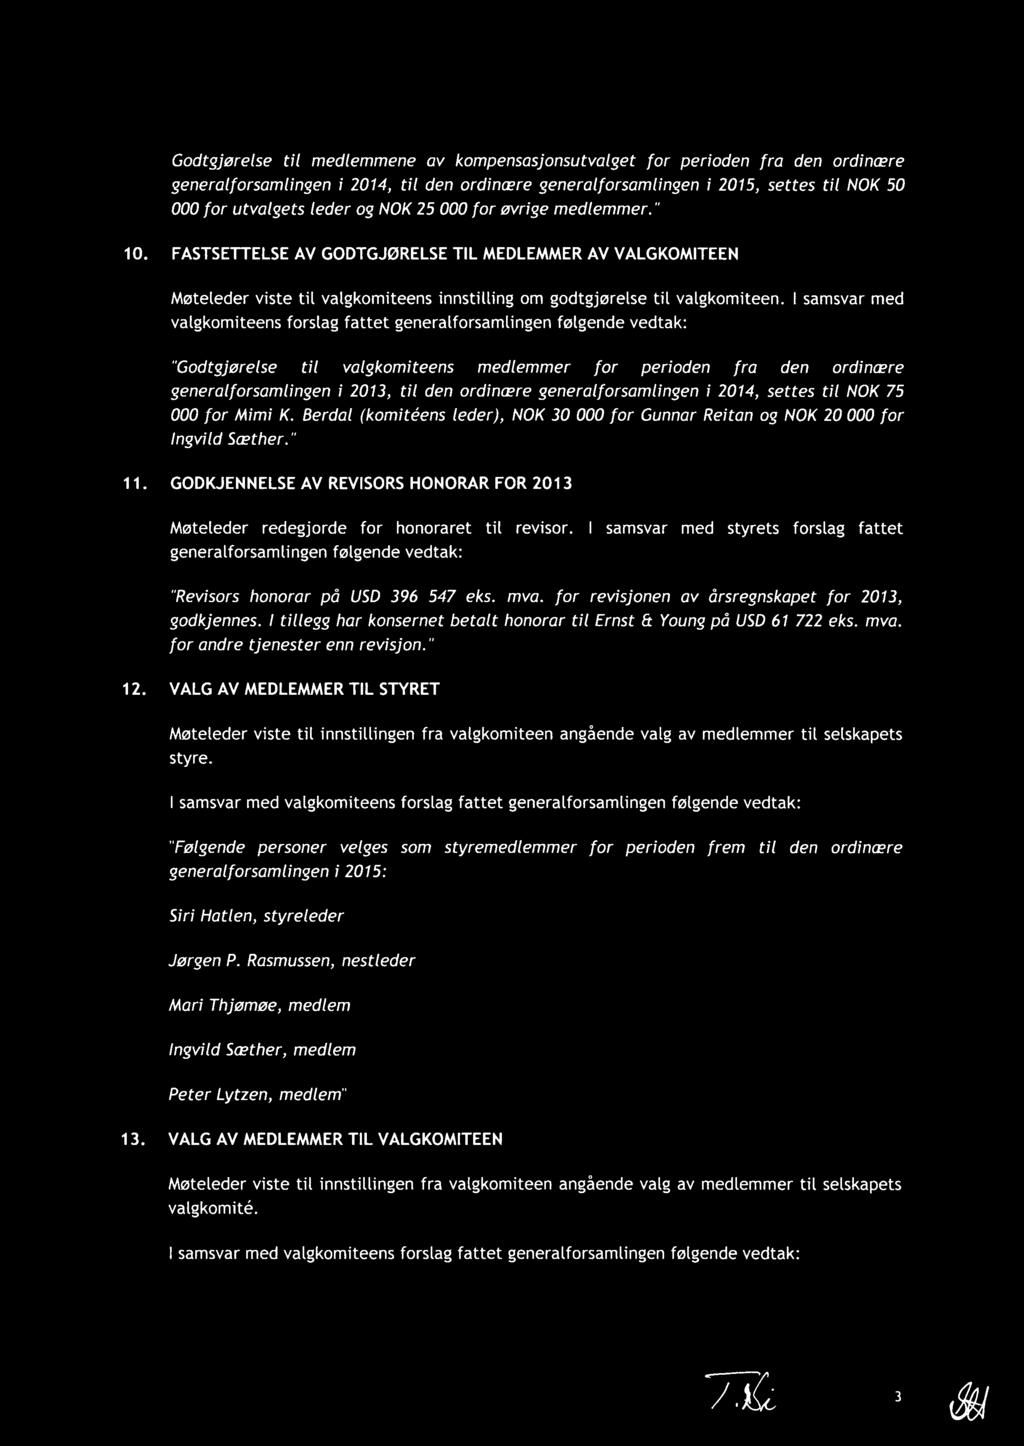 I samsvar med valgkomiteens forslag fattet generalforsamlingen følgende vedtak: "Godtgjørelse til valgkomiteens medlemmer for perioden fra den ordinære generalforsamlingen i 2013, til den ordinære